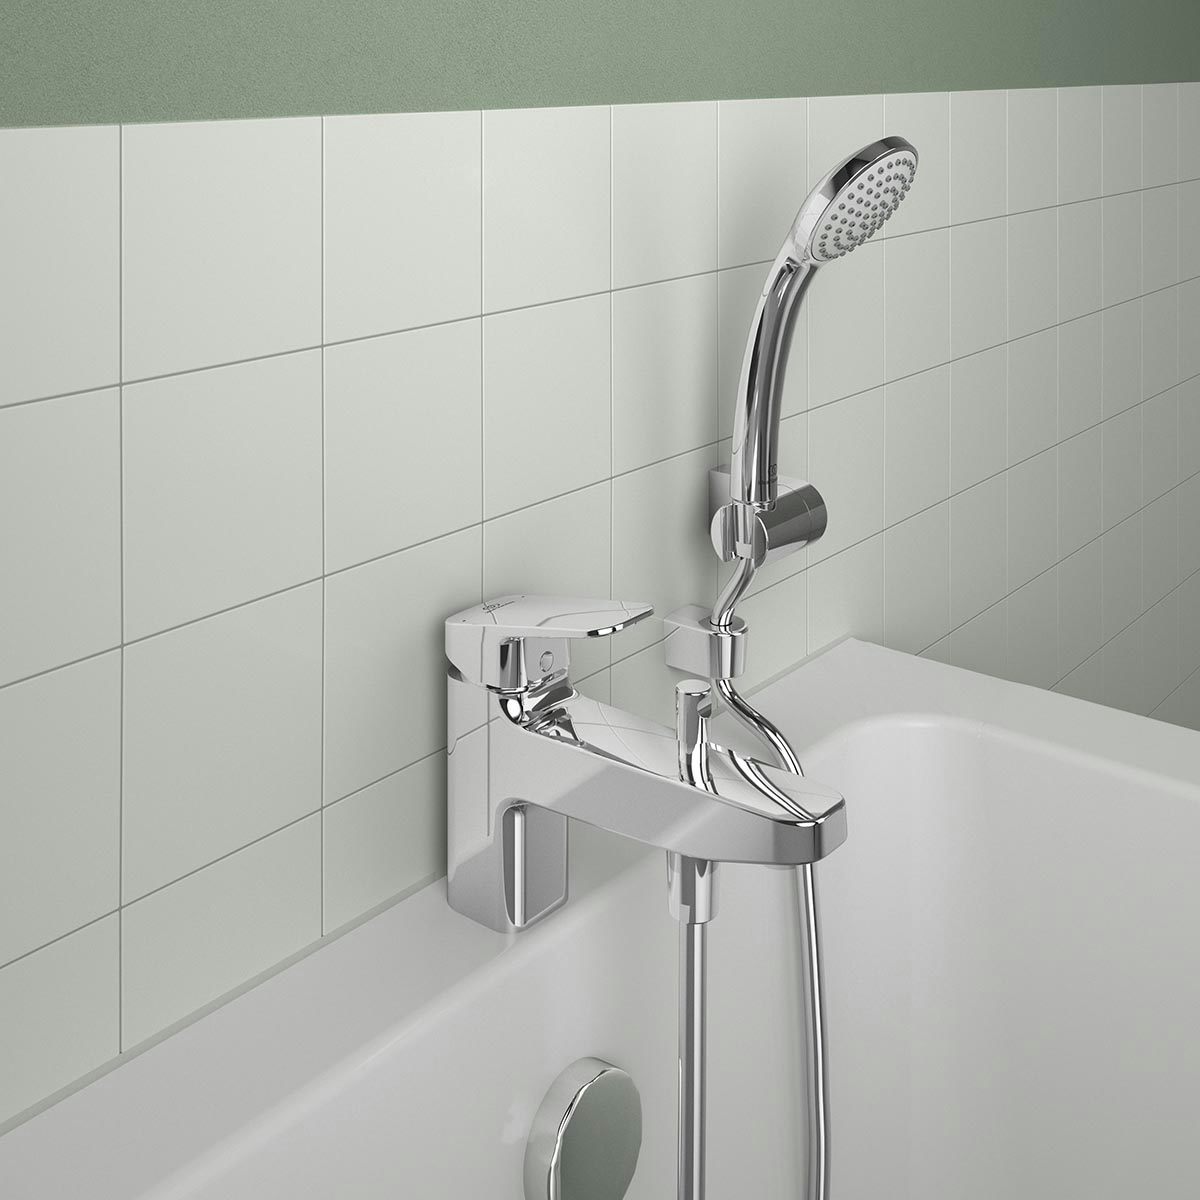 Ideal Standard Ceraplan single lever bath shower mixer tap with shower set